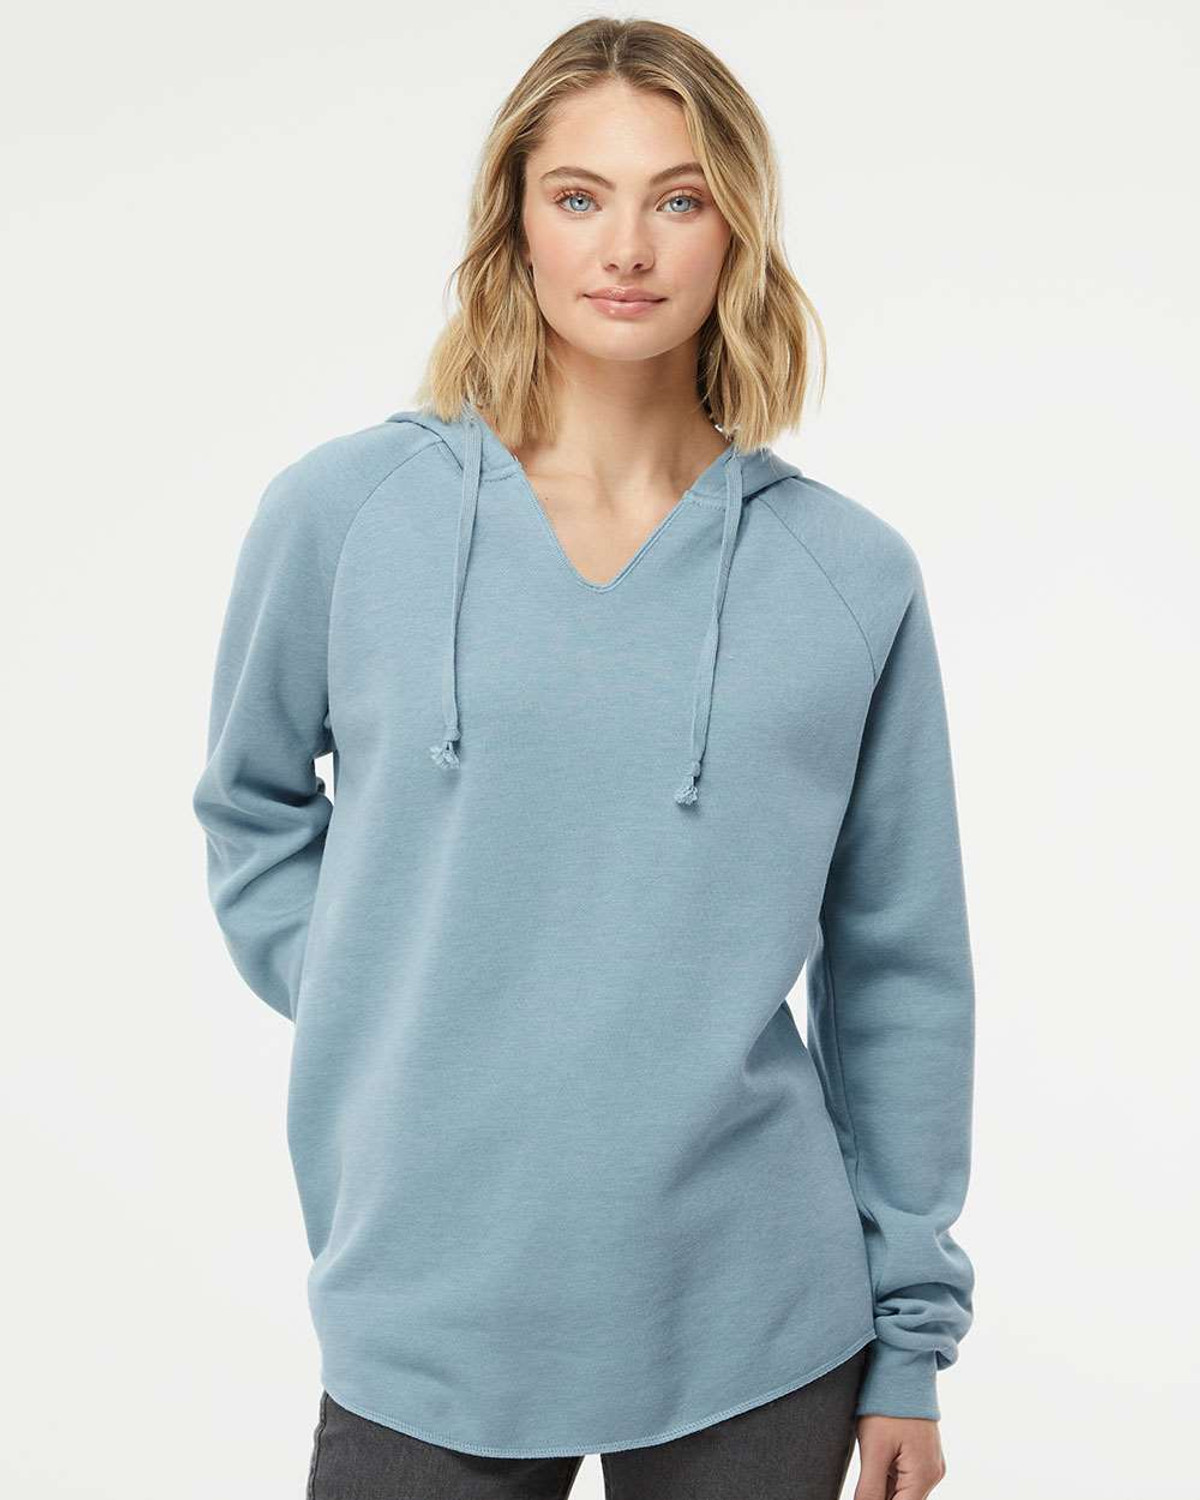 Women's Blue Sweatshirts & Hoodies